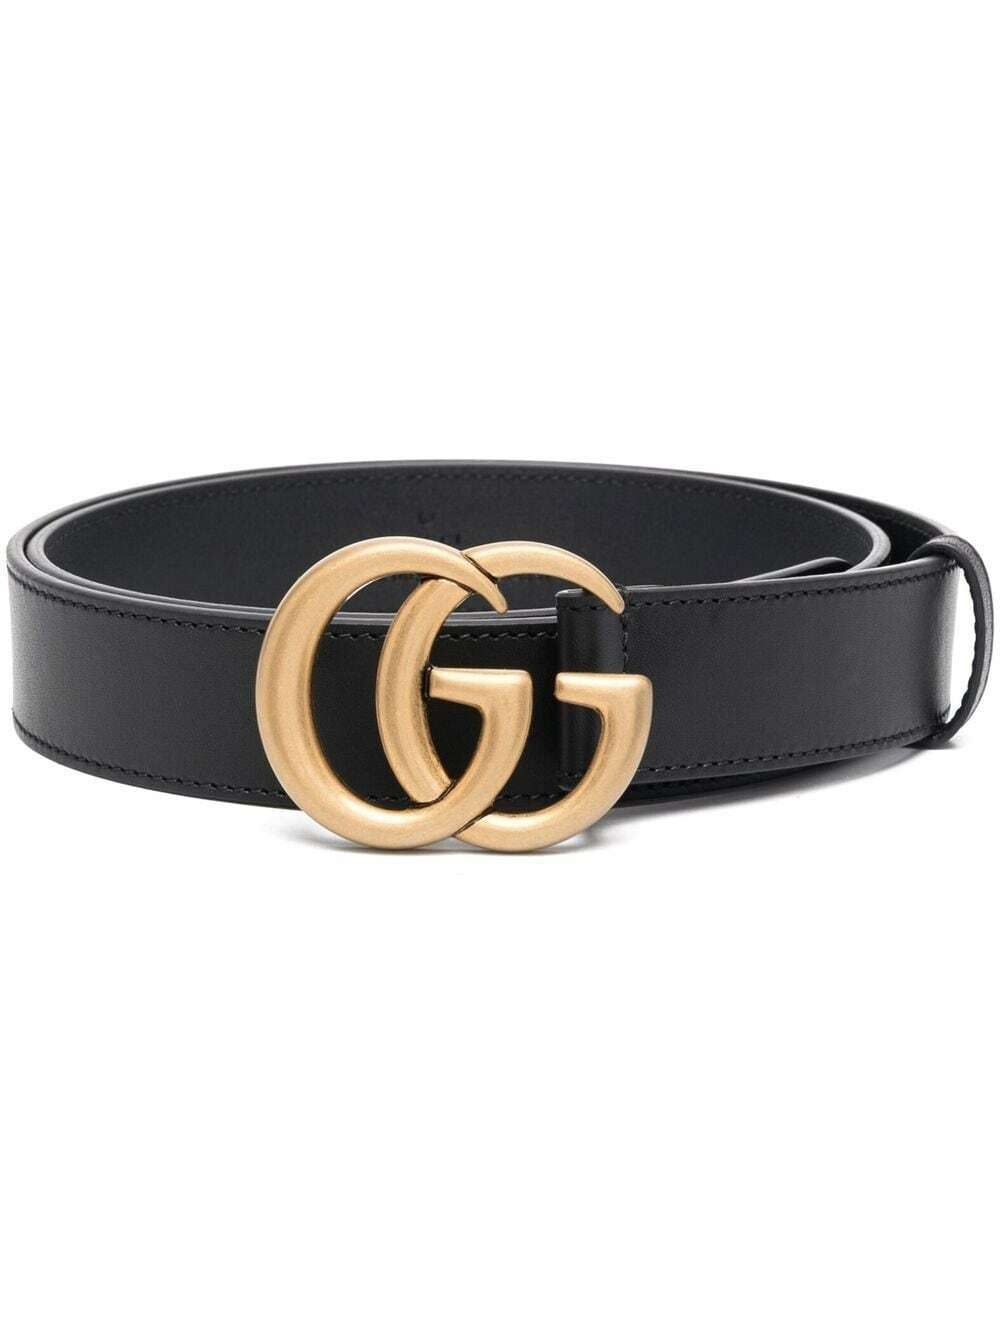 GUCCI - Logo Belt Gucci